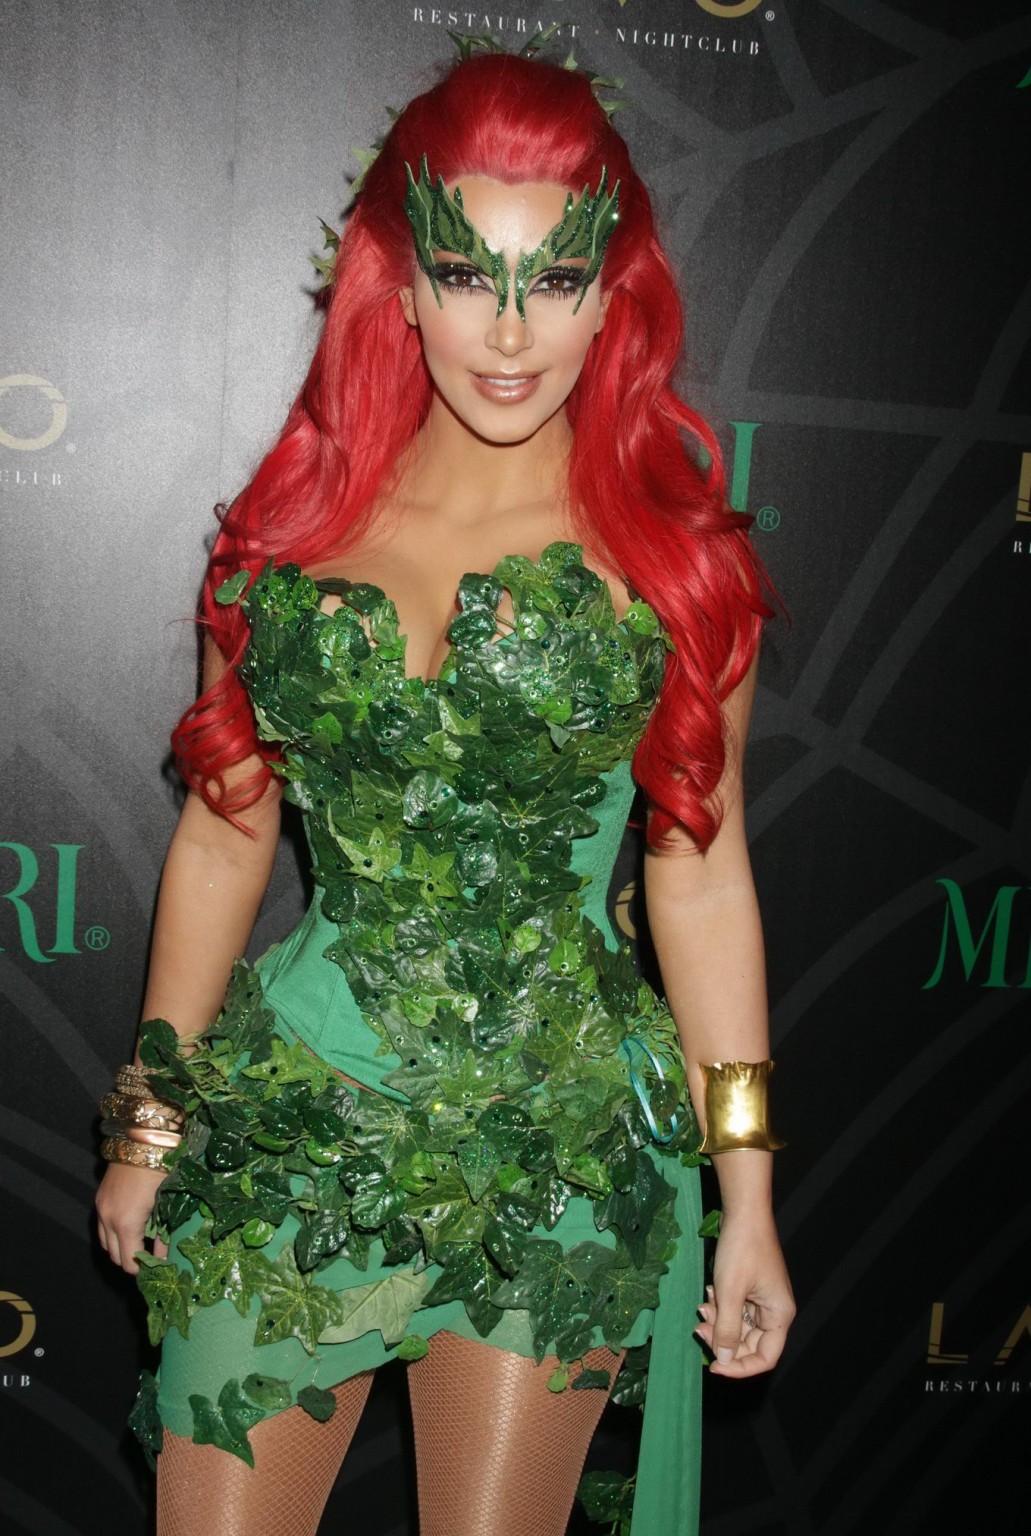 Kim kardashian vollbusig bei grüner midory halloween party in las vegas
 #75283756